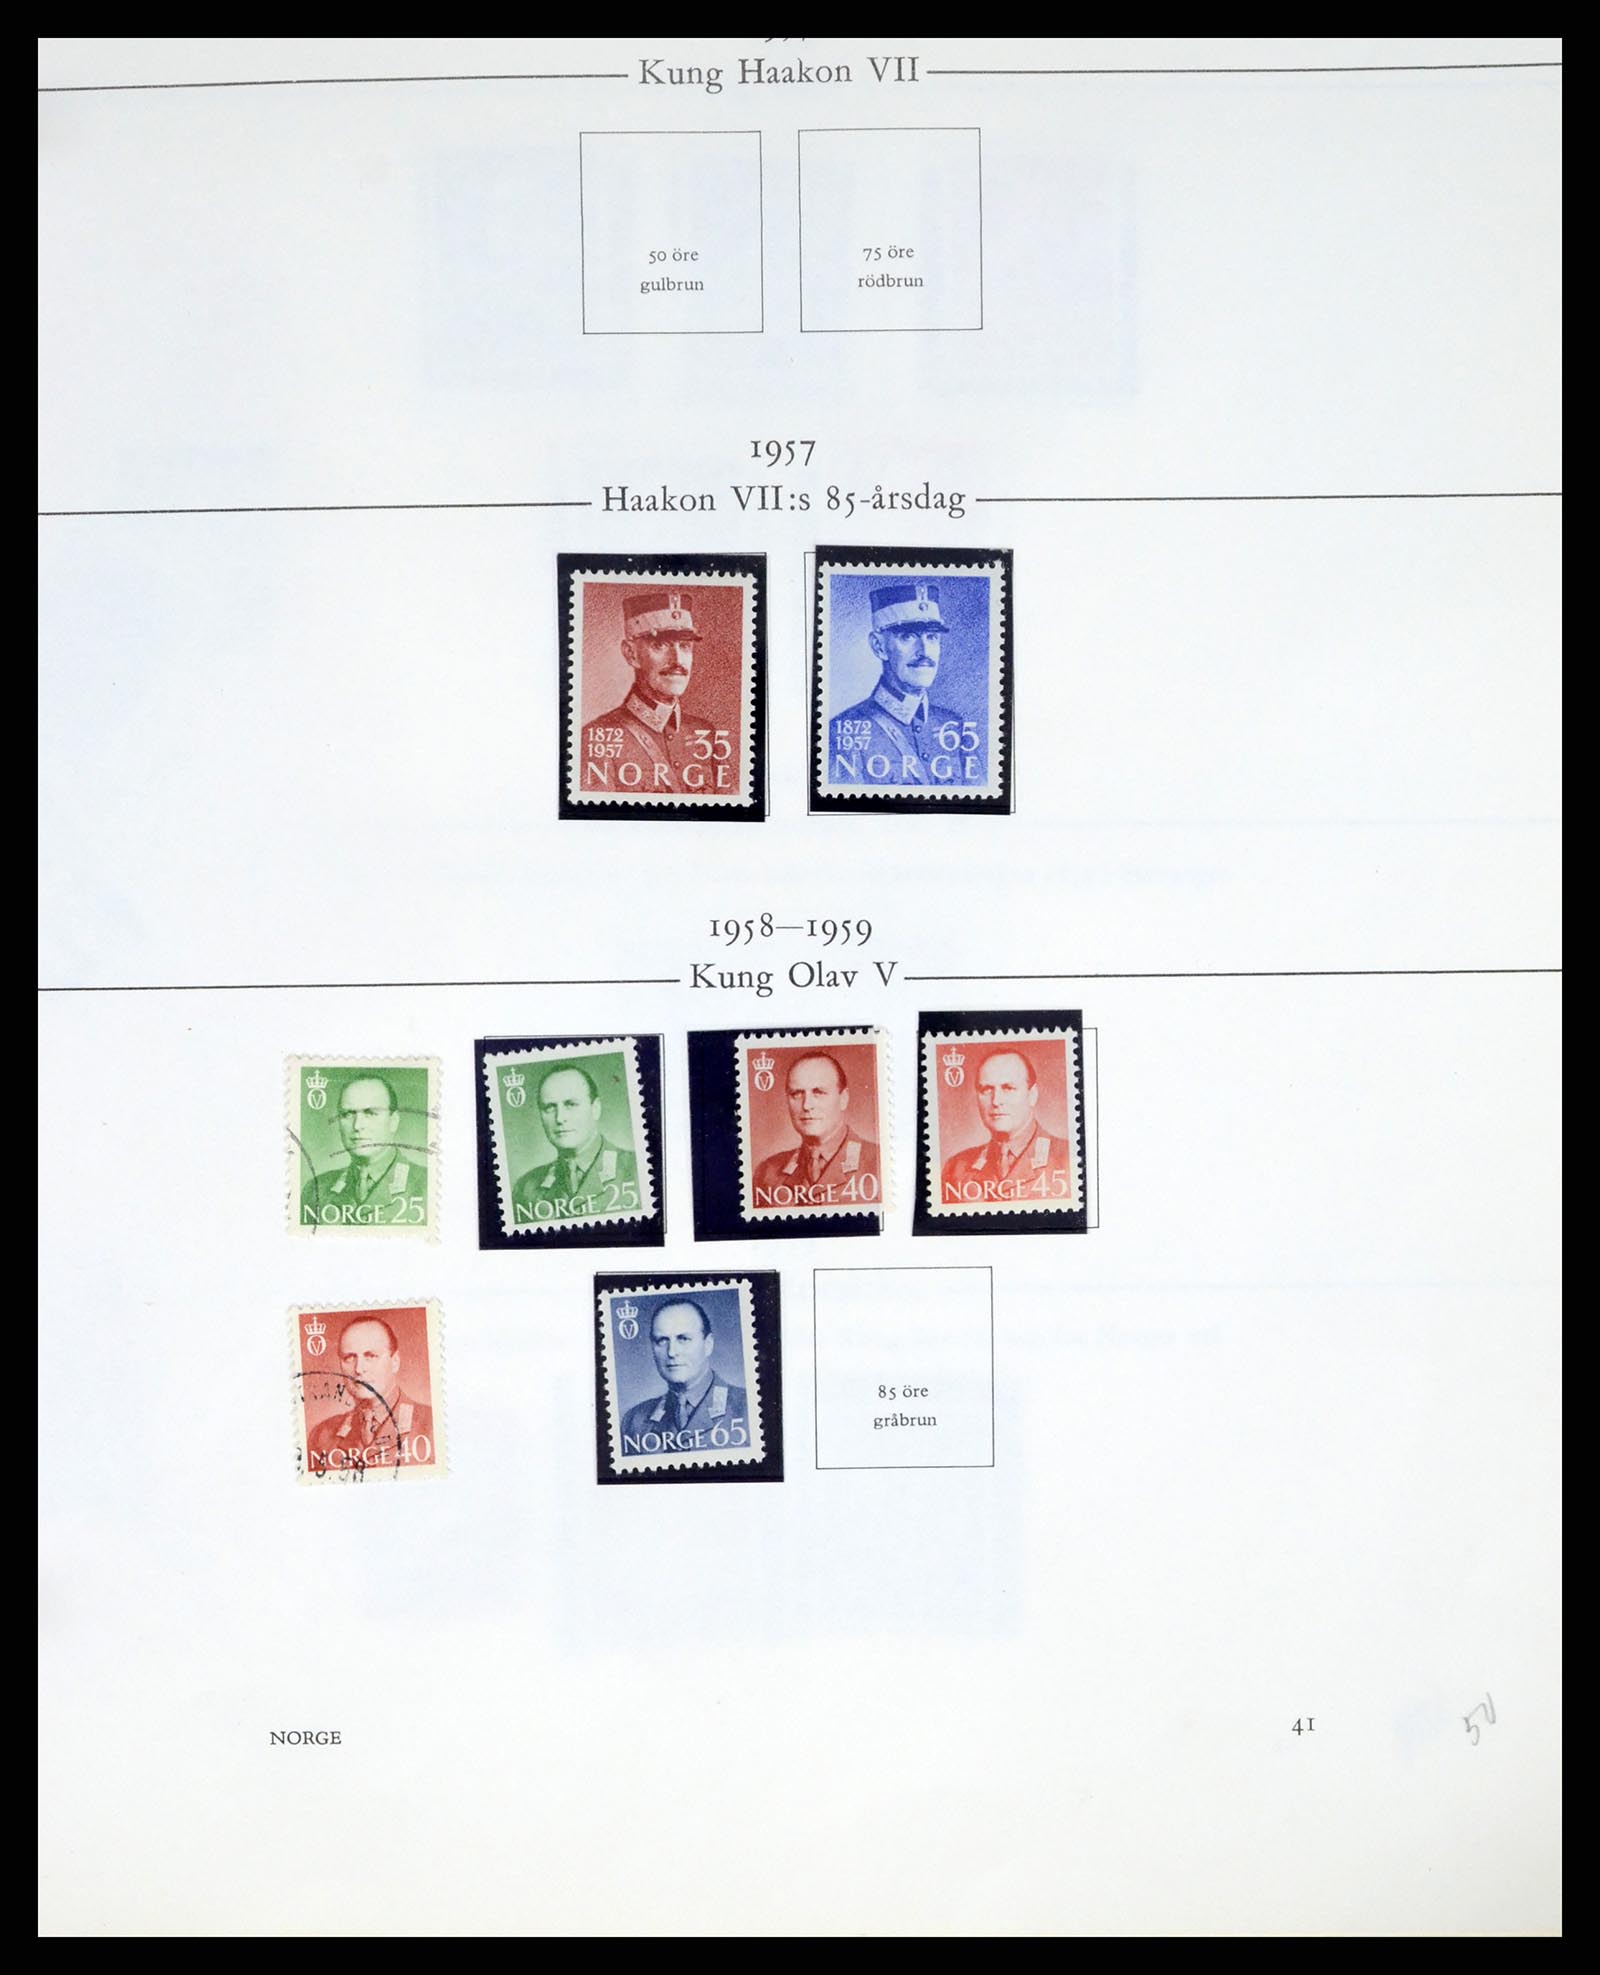 37387 042 - Stamp collection 37387 Scandinavia 1851-1960.